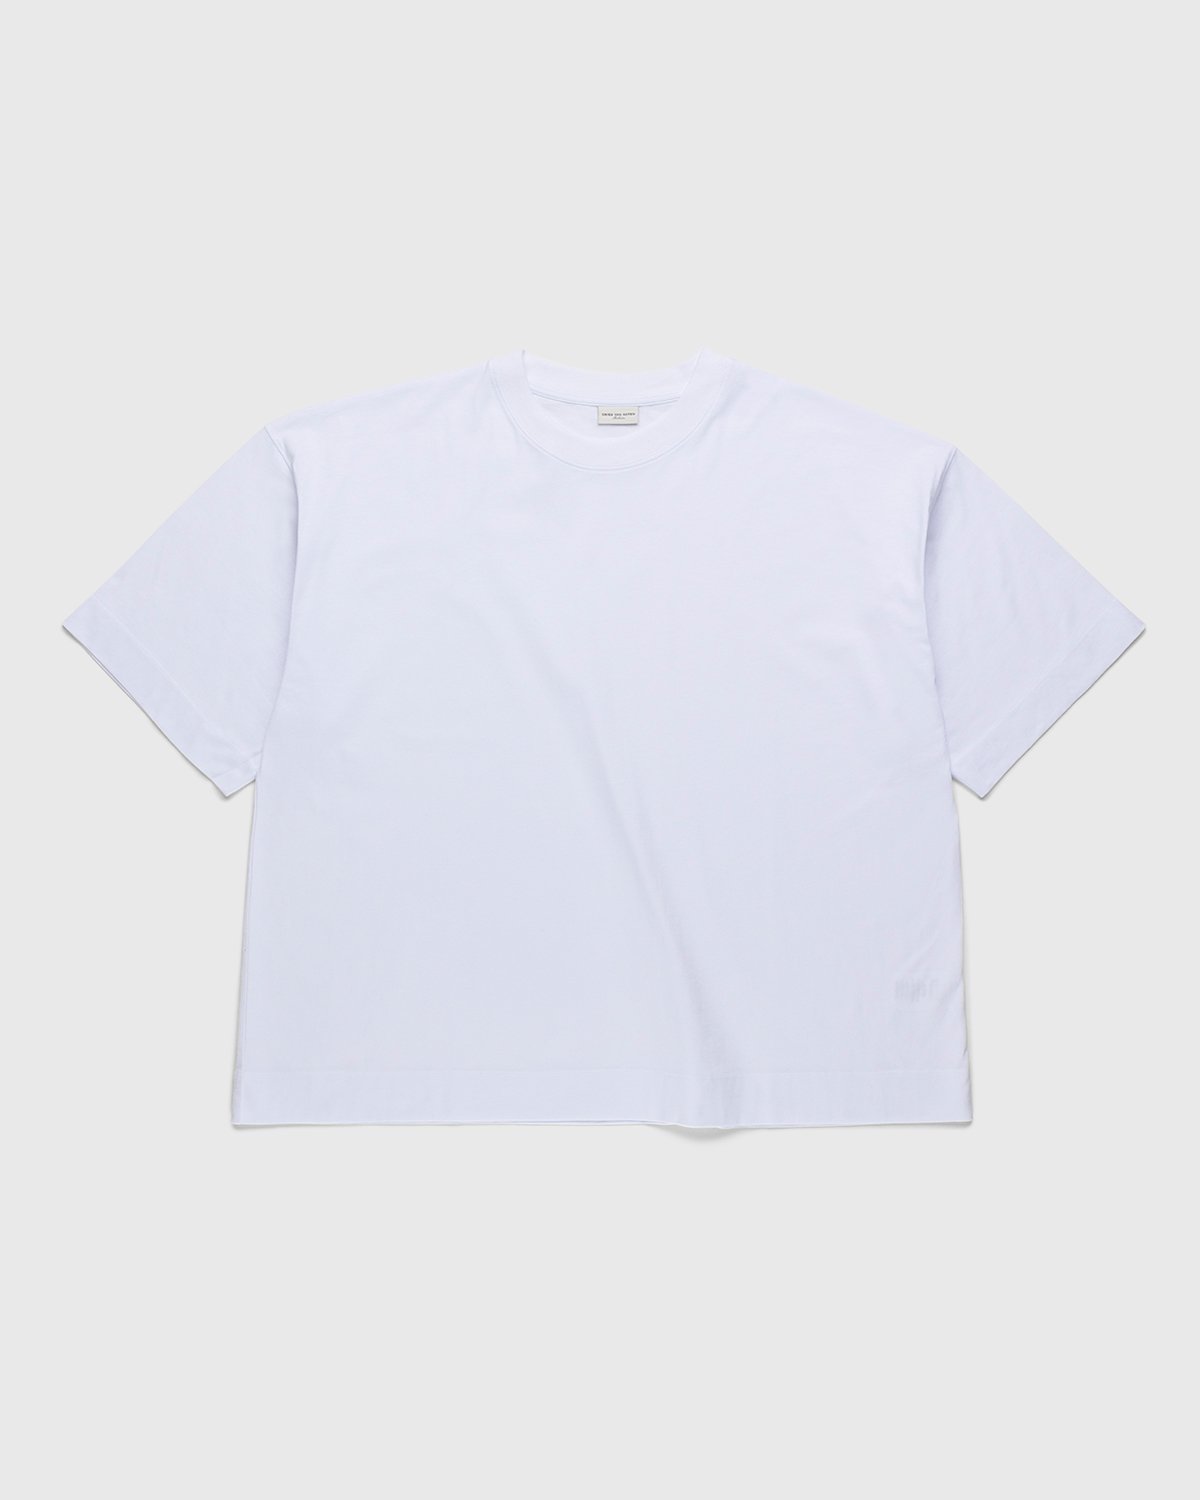 Dries van Noten - Hen Oversized T-Shirt White - Clothing - White - Image 2